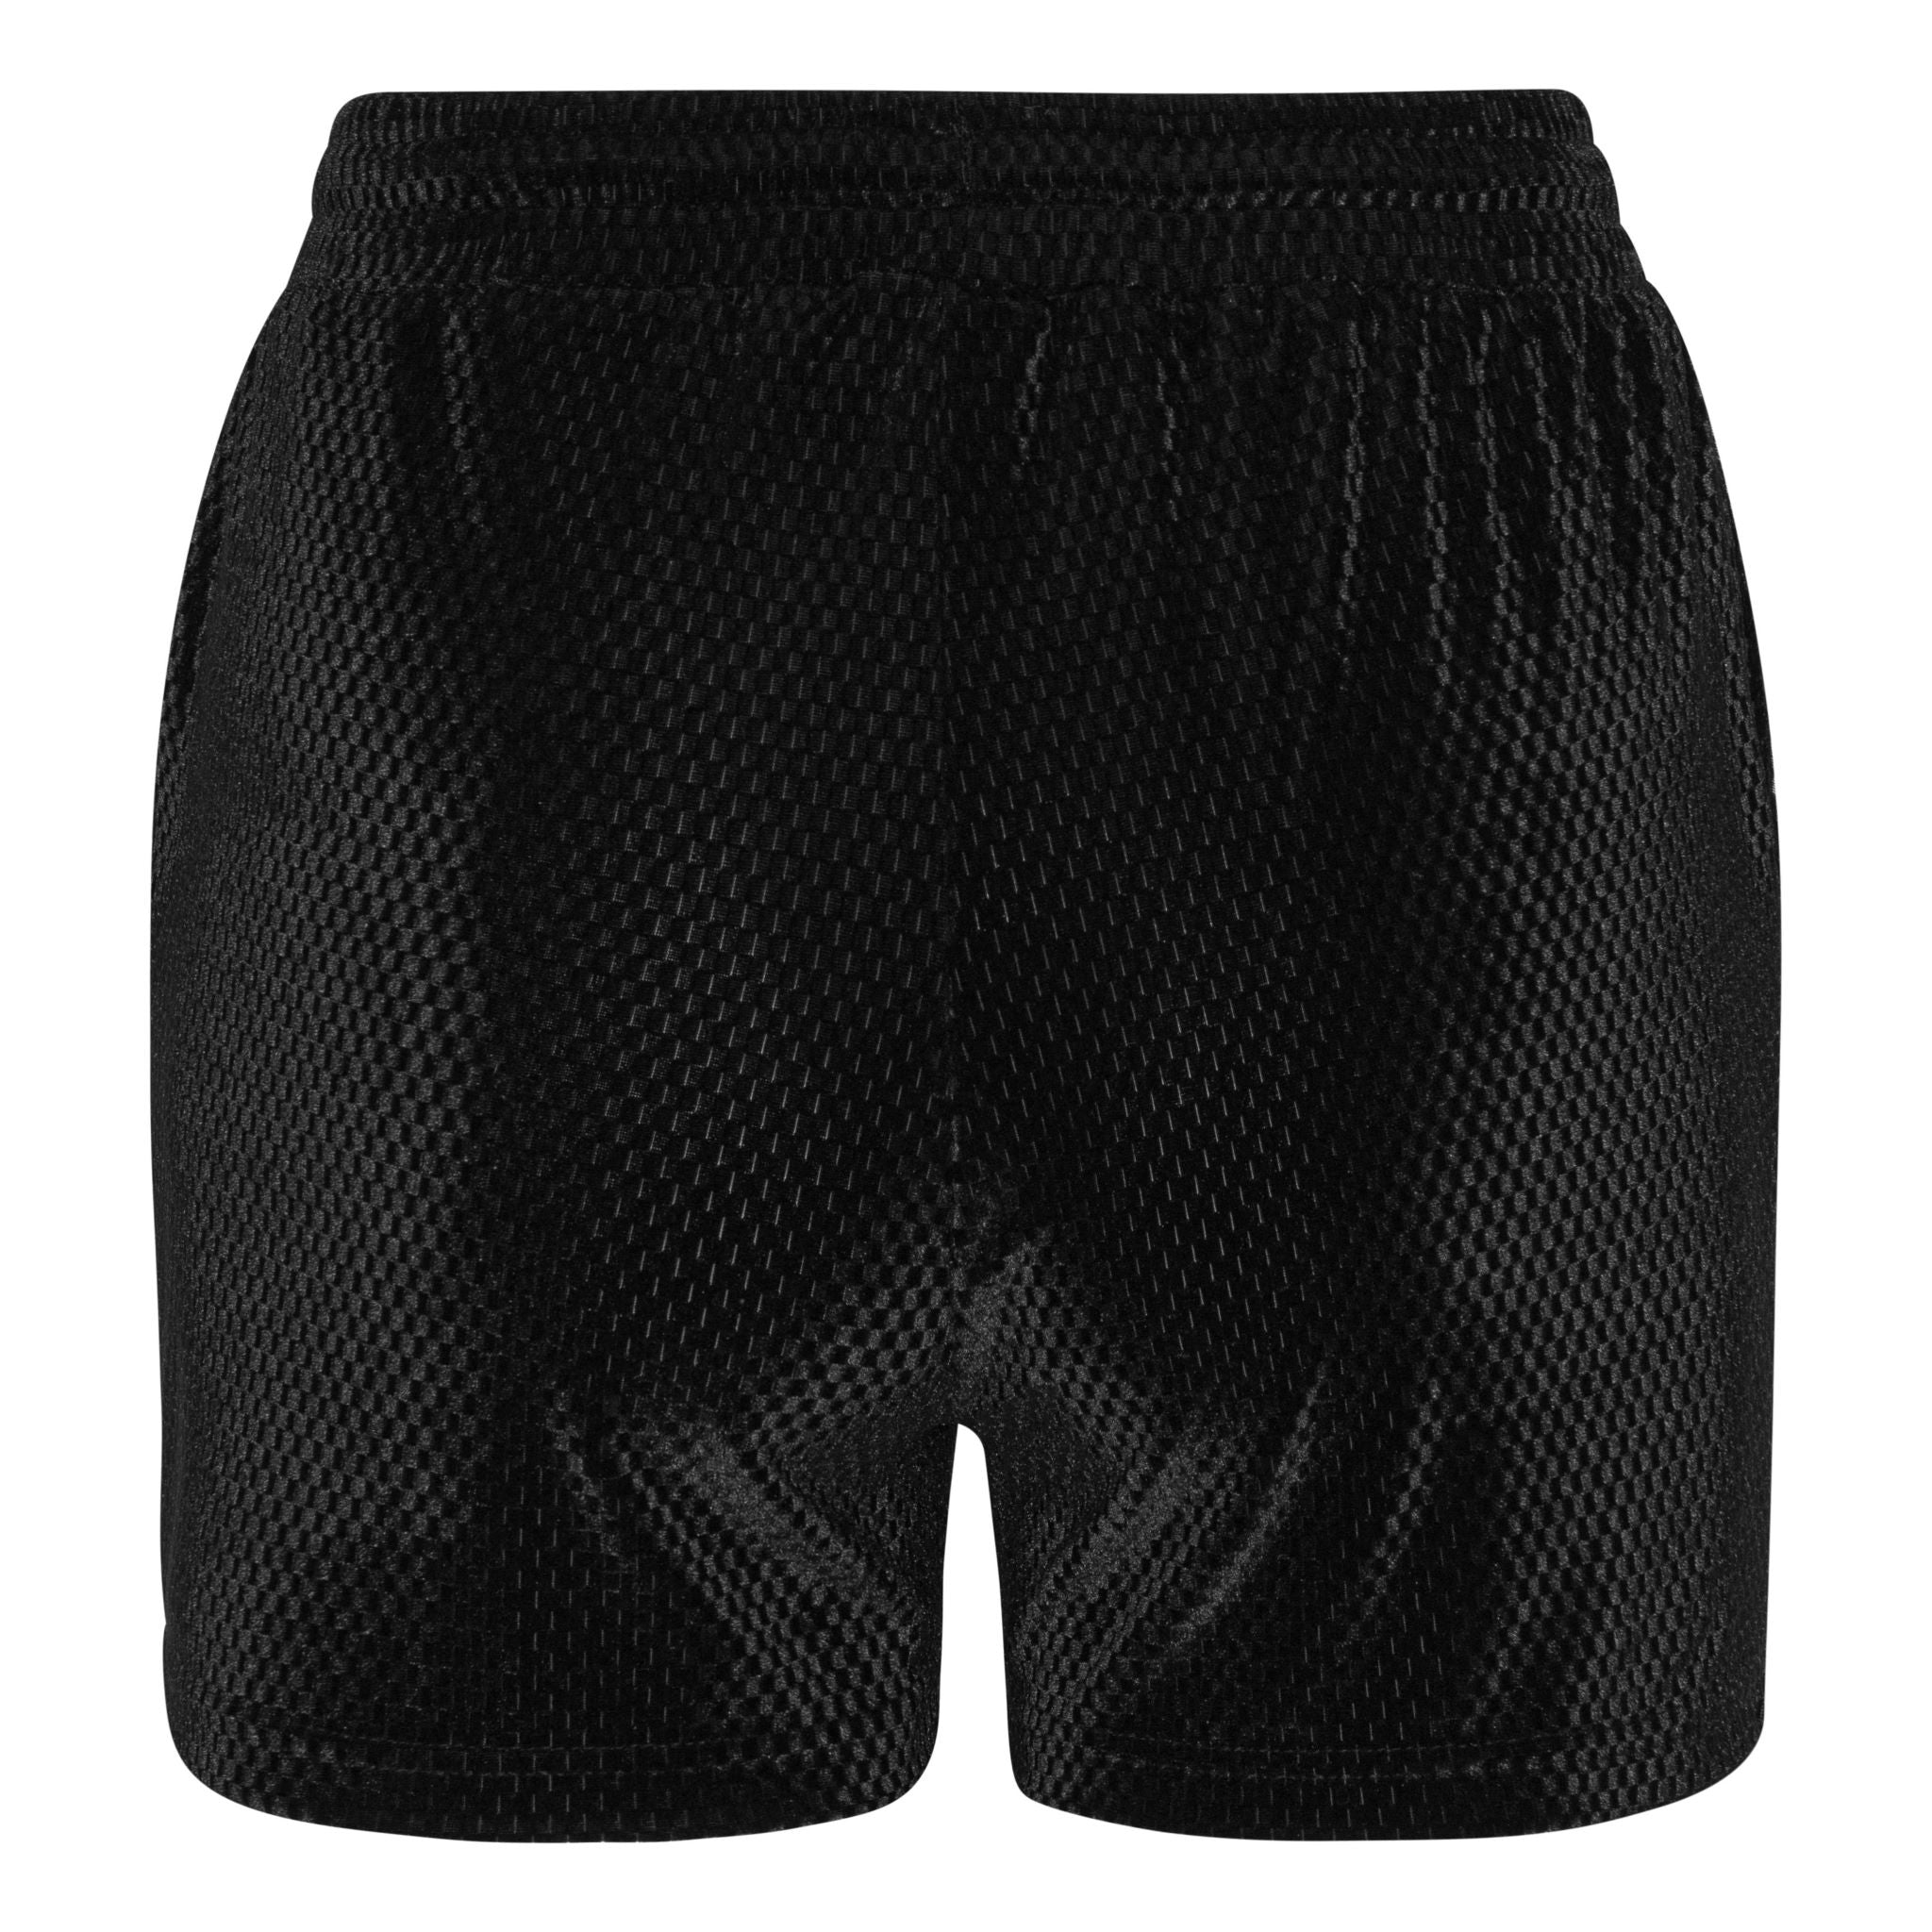 Velourmönstrade shorts